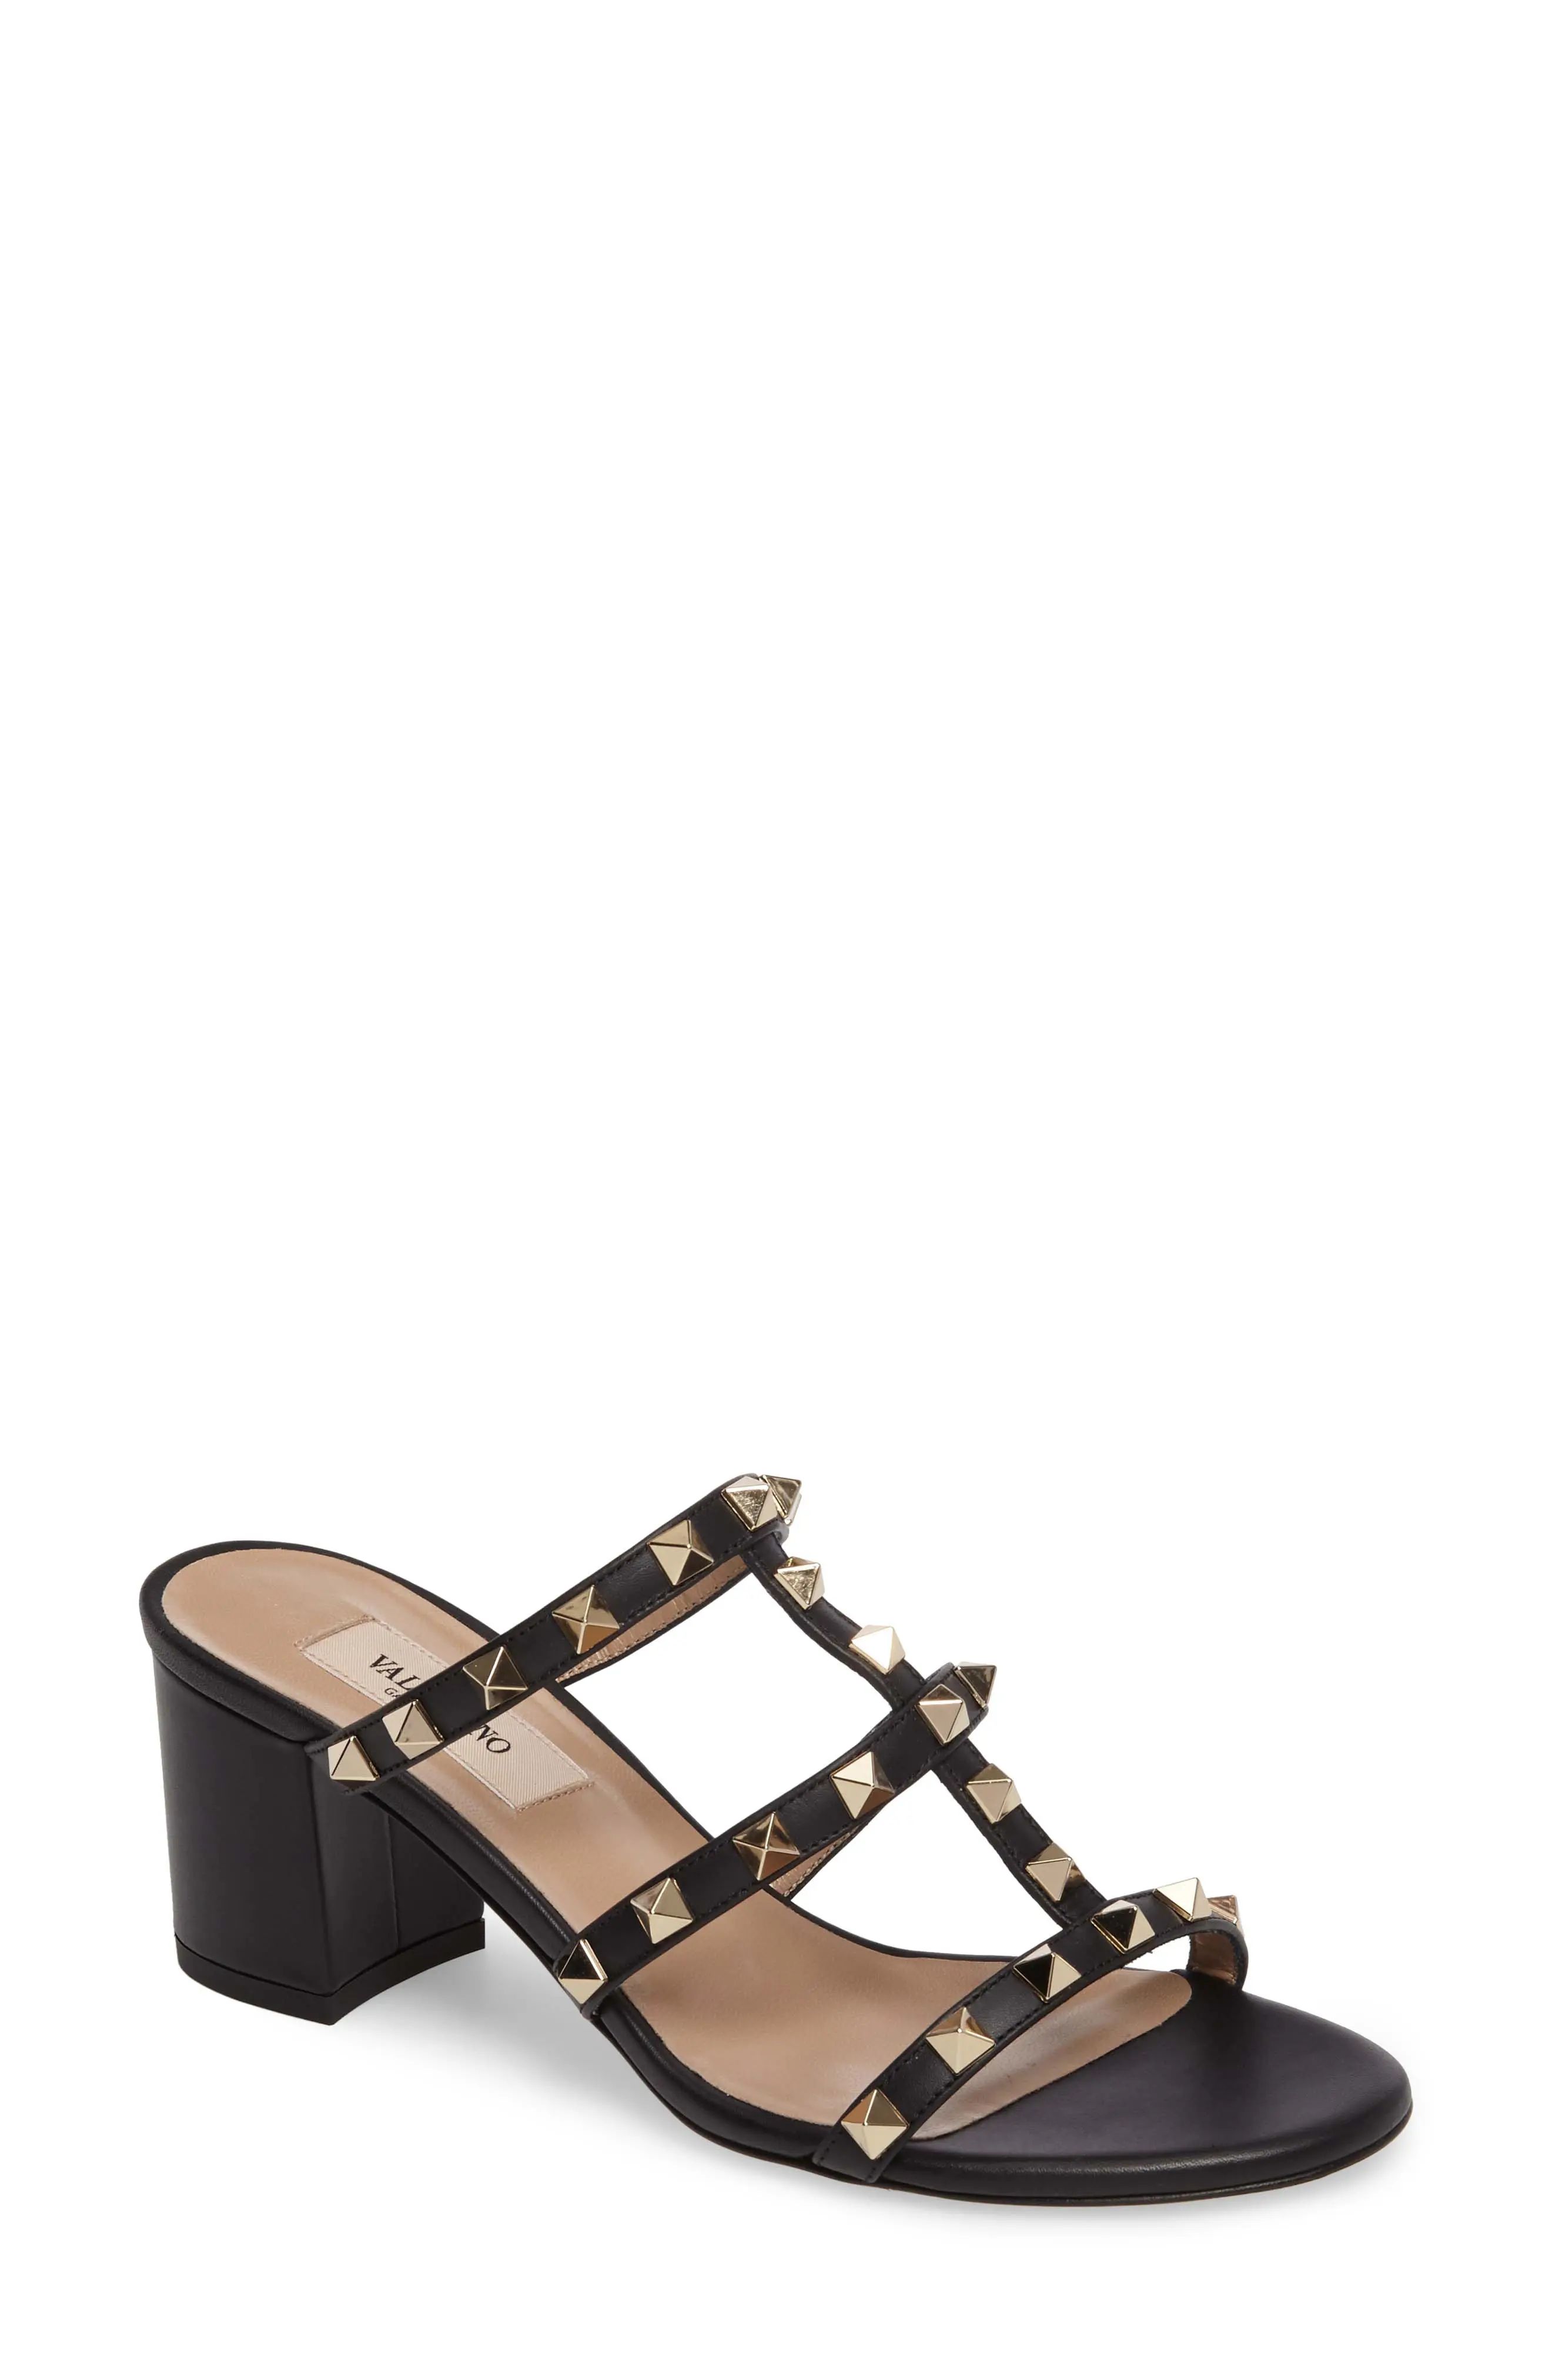 Women's Valentino Garavani Rockstud Slide Sandal, Size 10US / 40EU - Black | Nordstrom